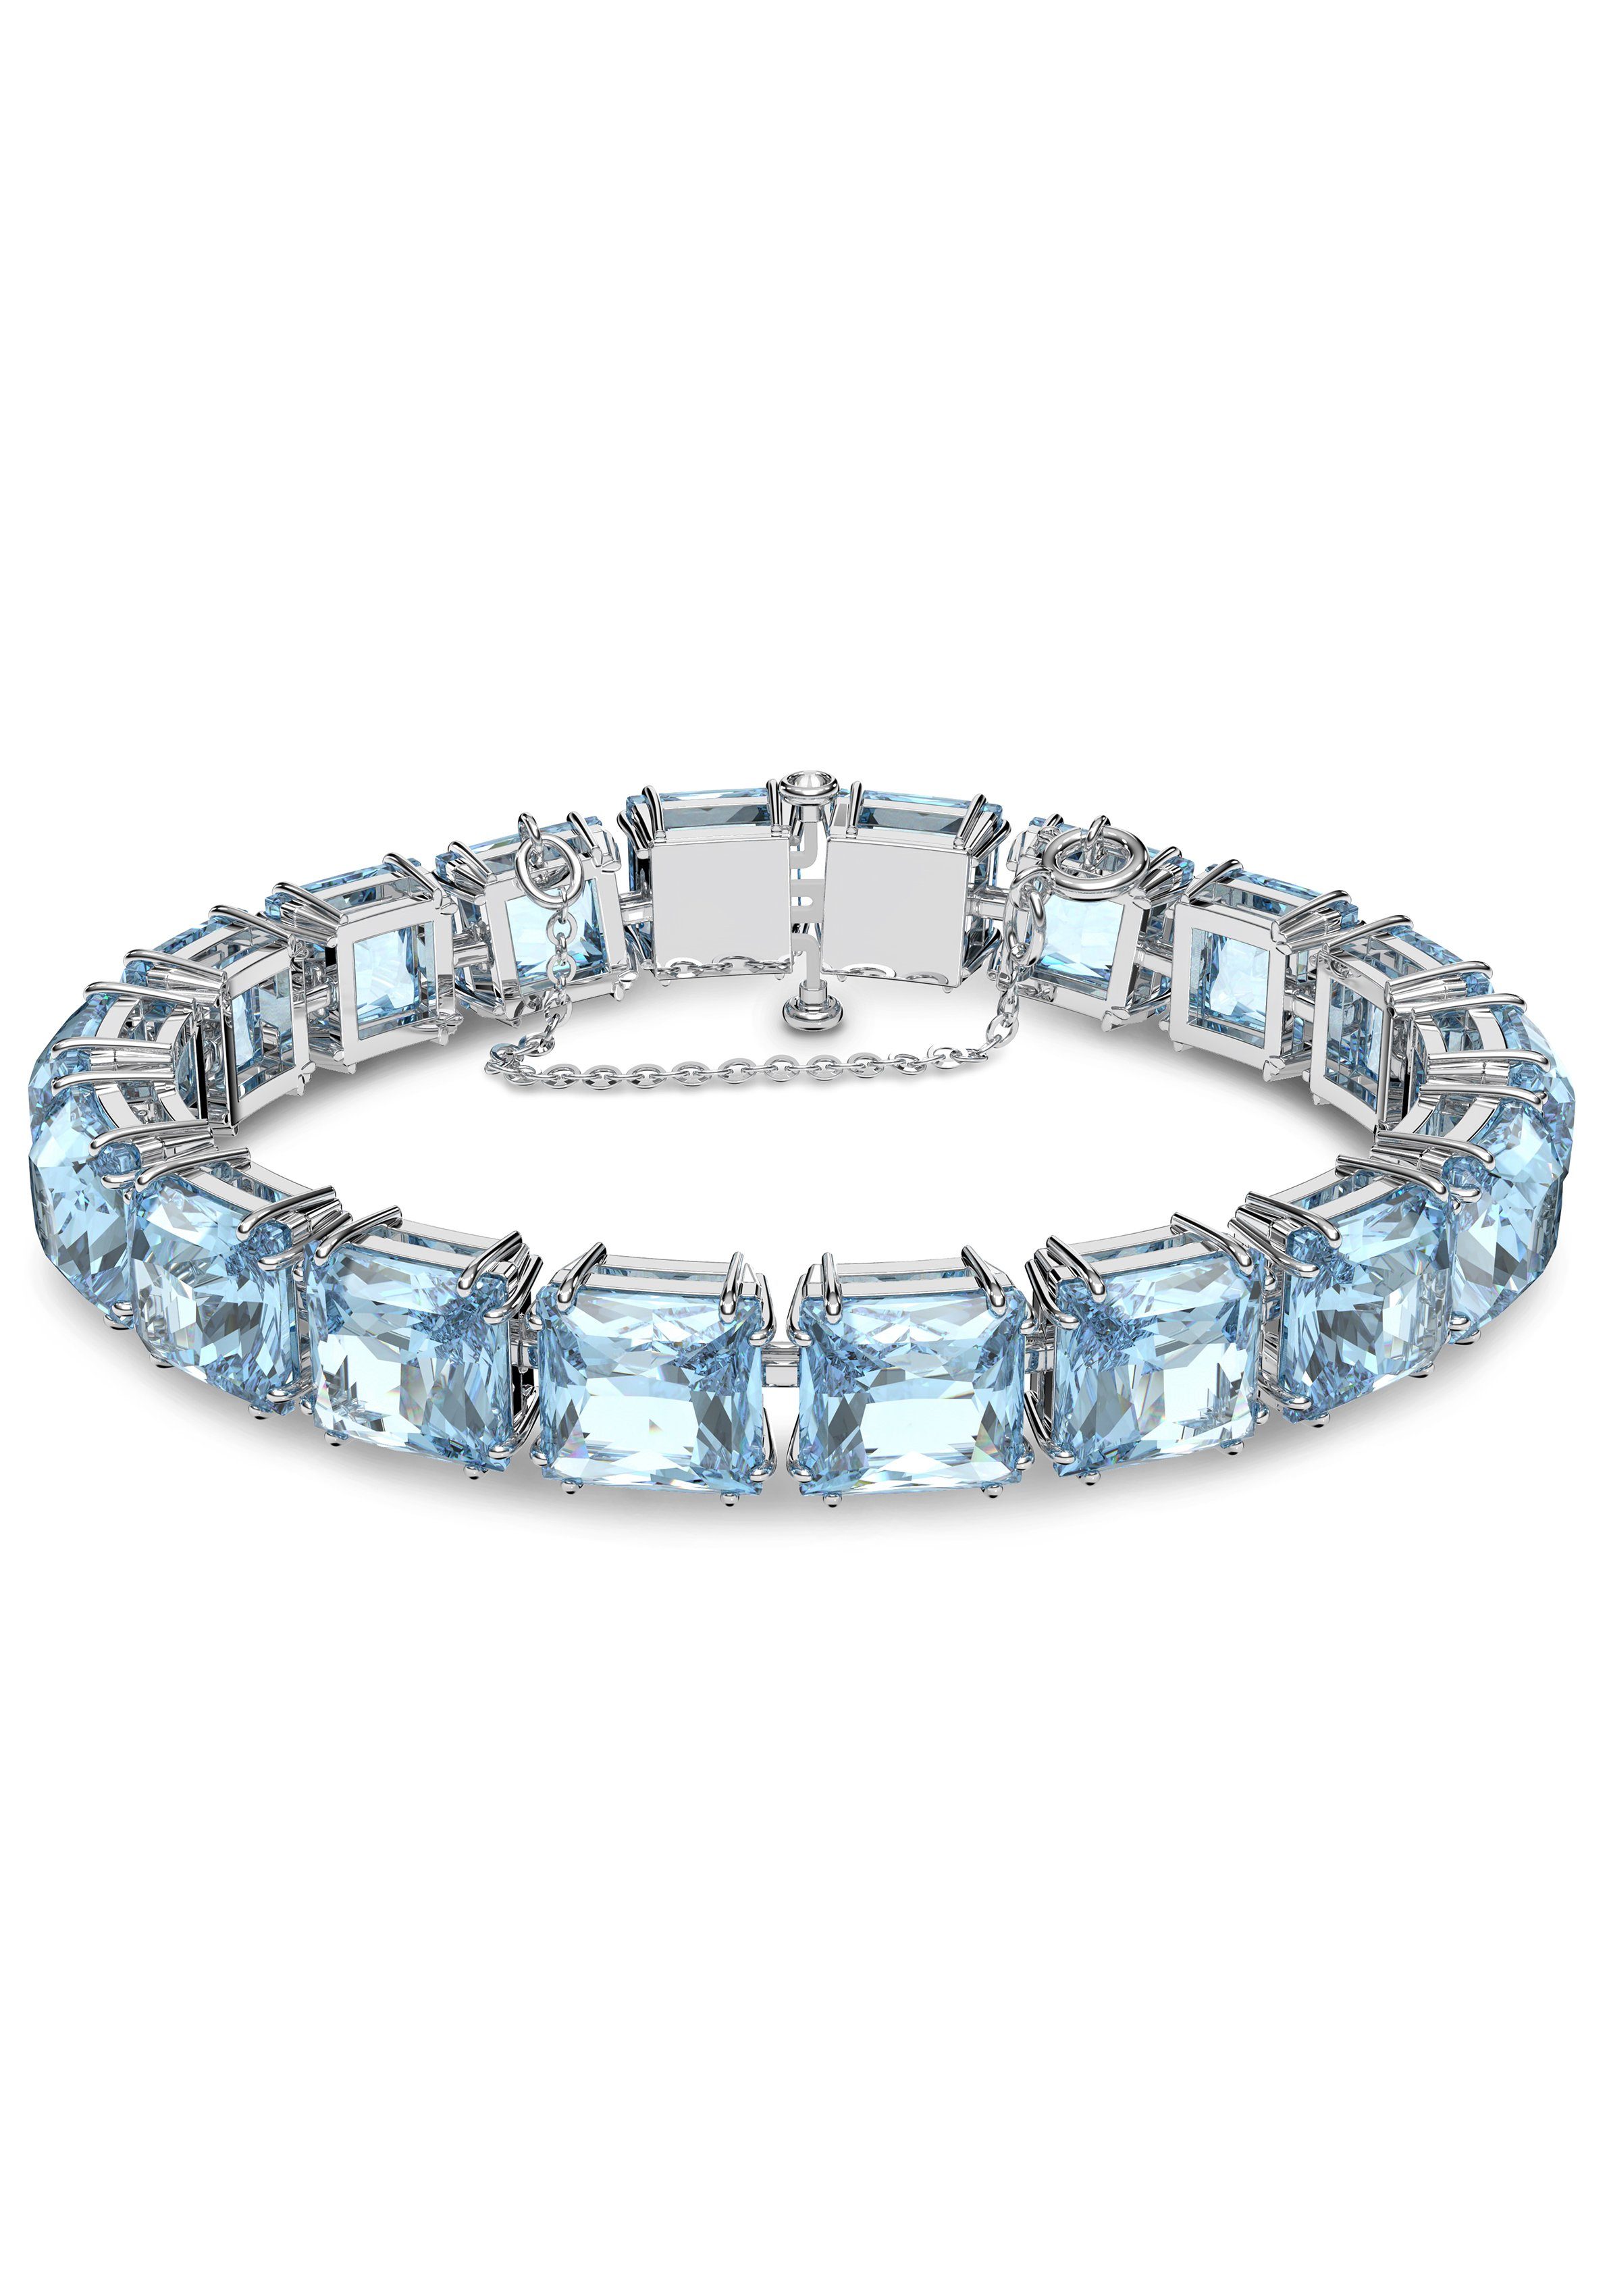 Swarovski Armband Millenia, 5612682, mit Swarovski® Kristall Quadrat Kristalle 5614924, Schliff, metallfarben-blau im